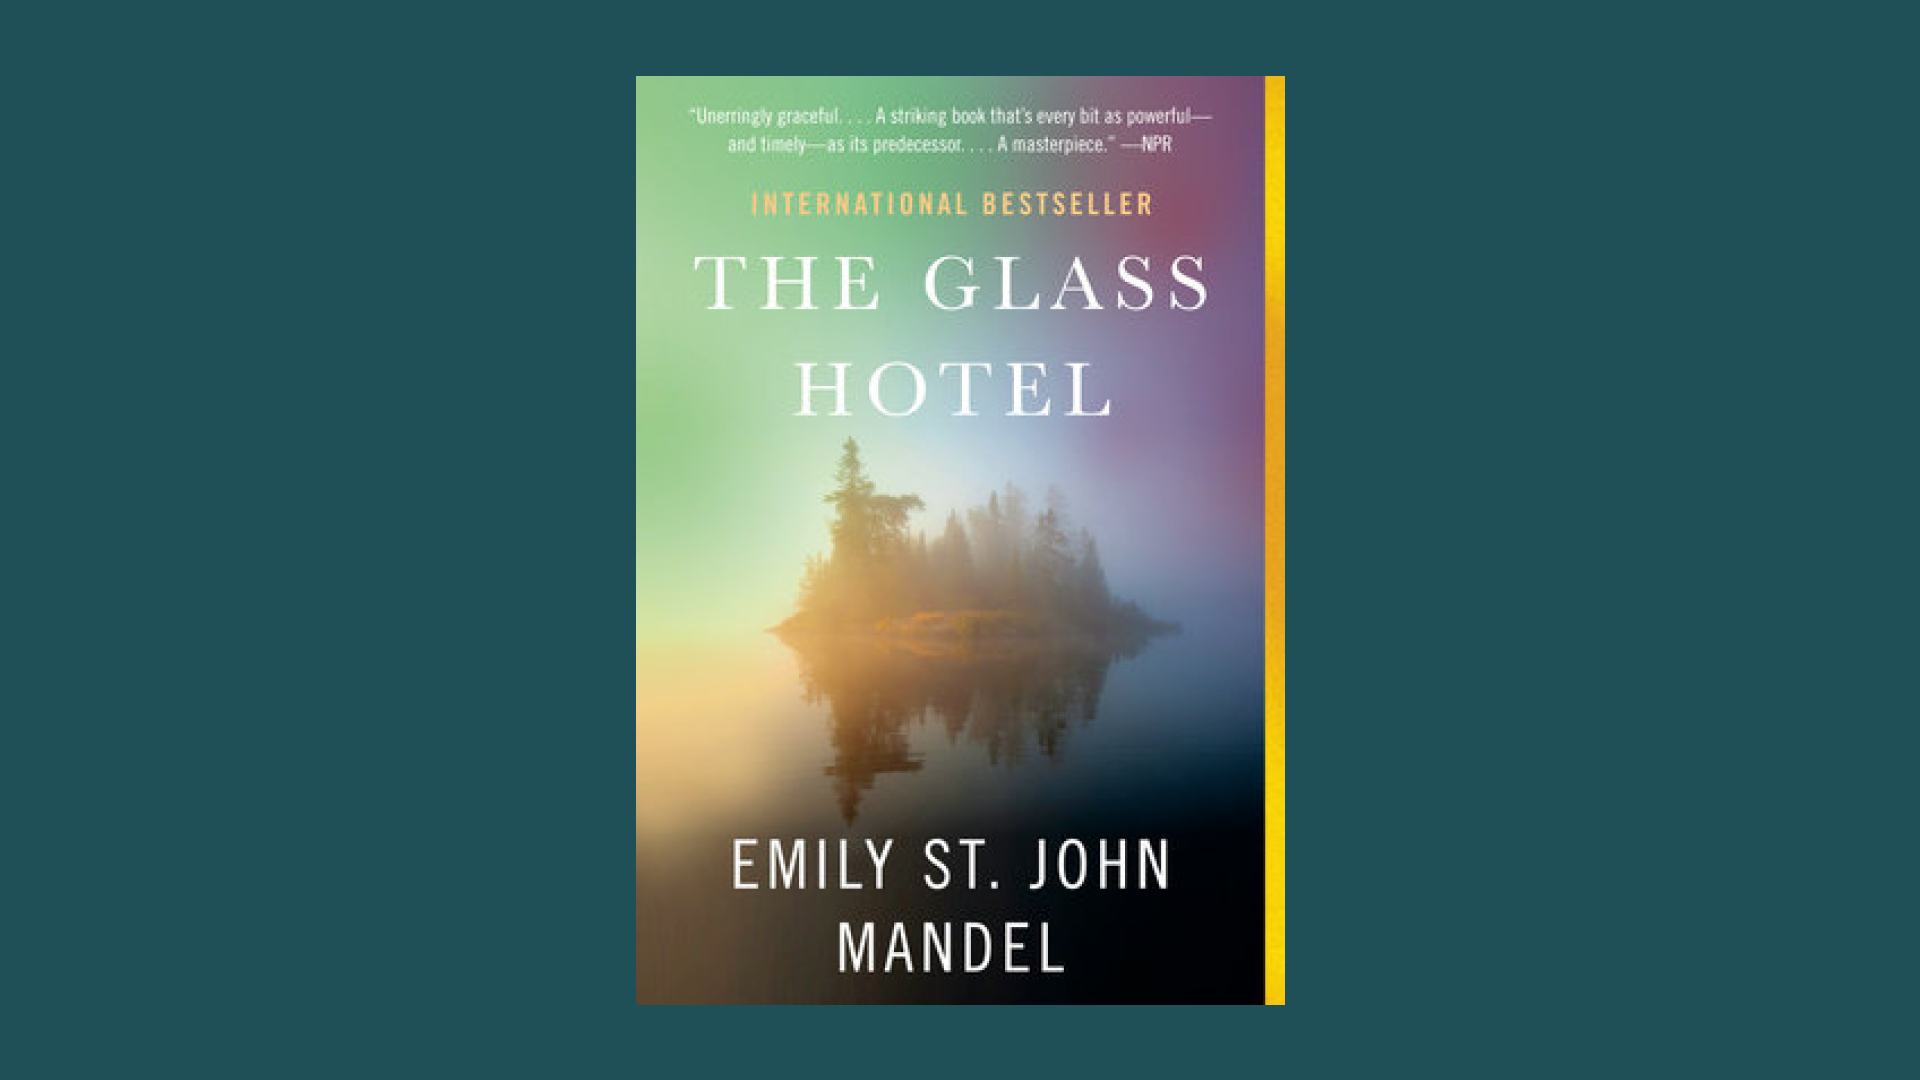 "The Glass Hotel" by Emily St. John Mandel